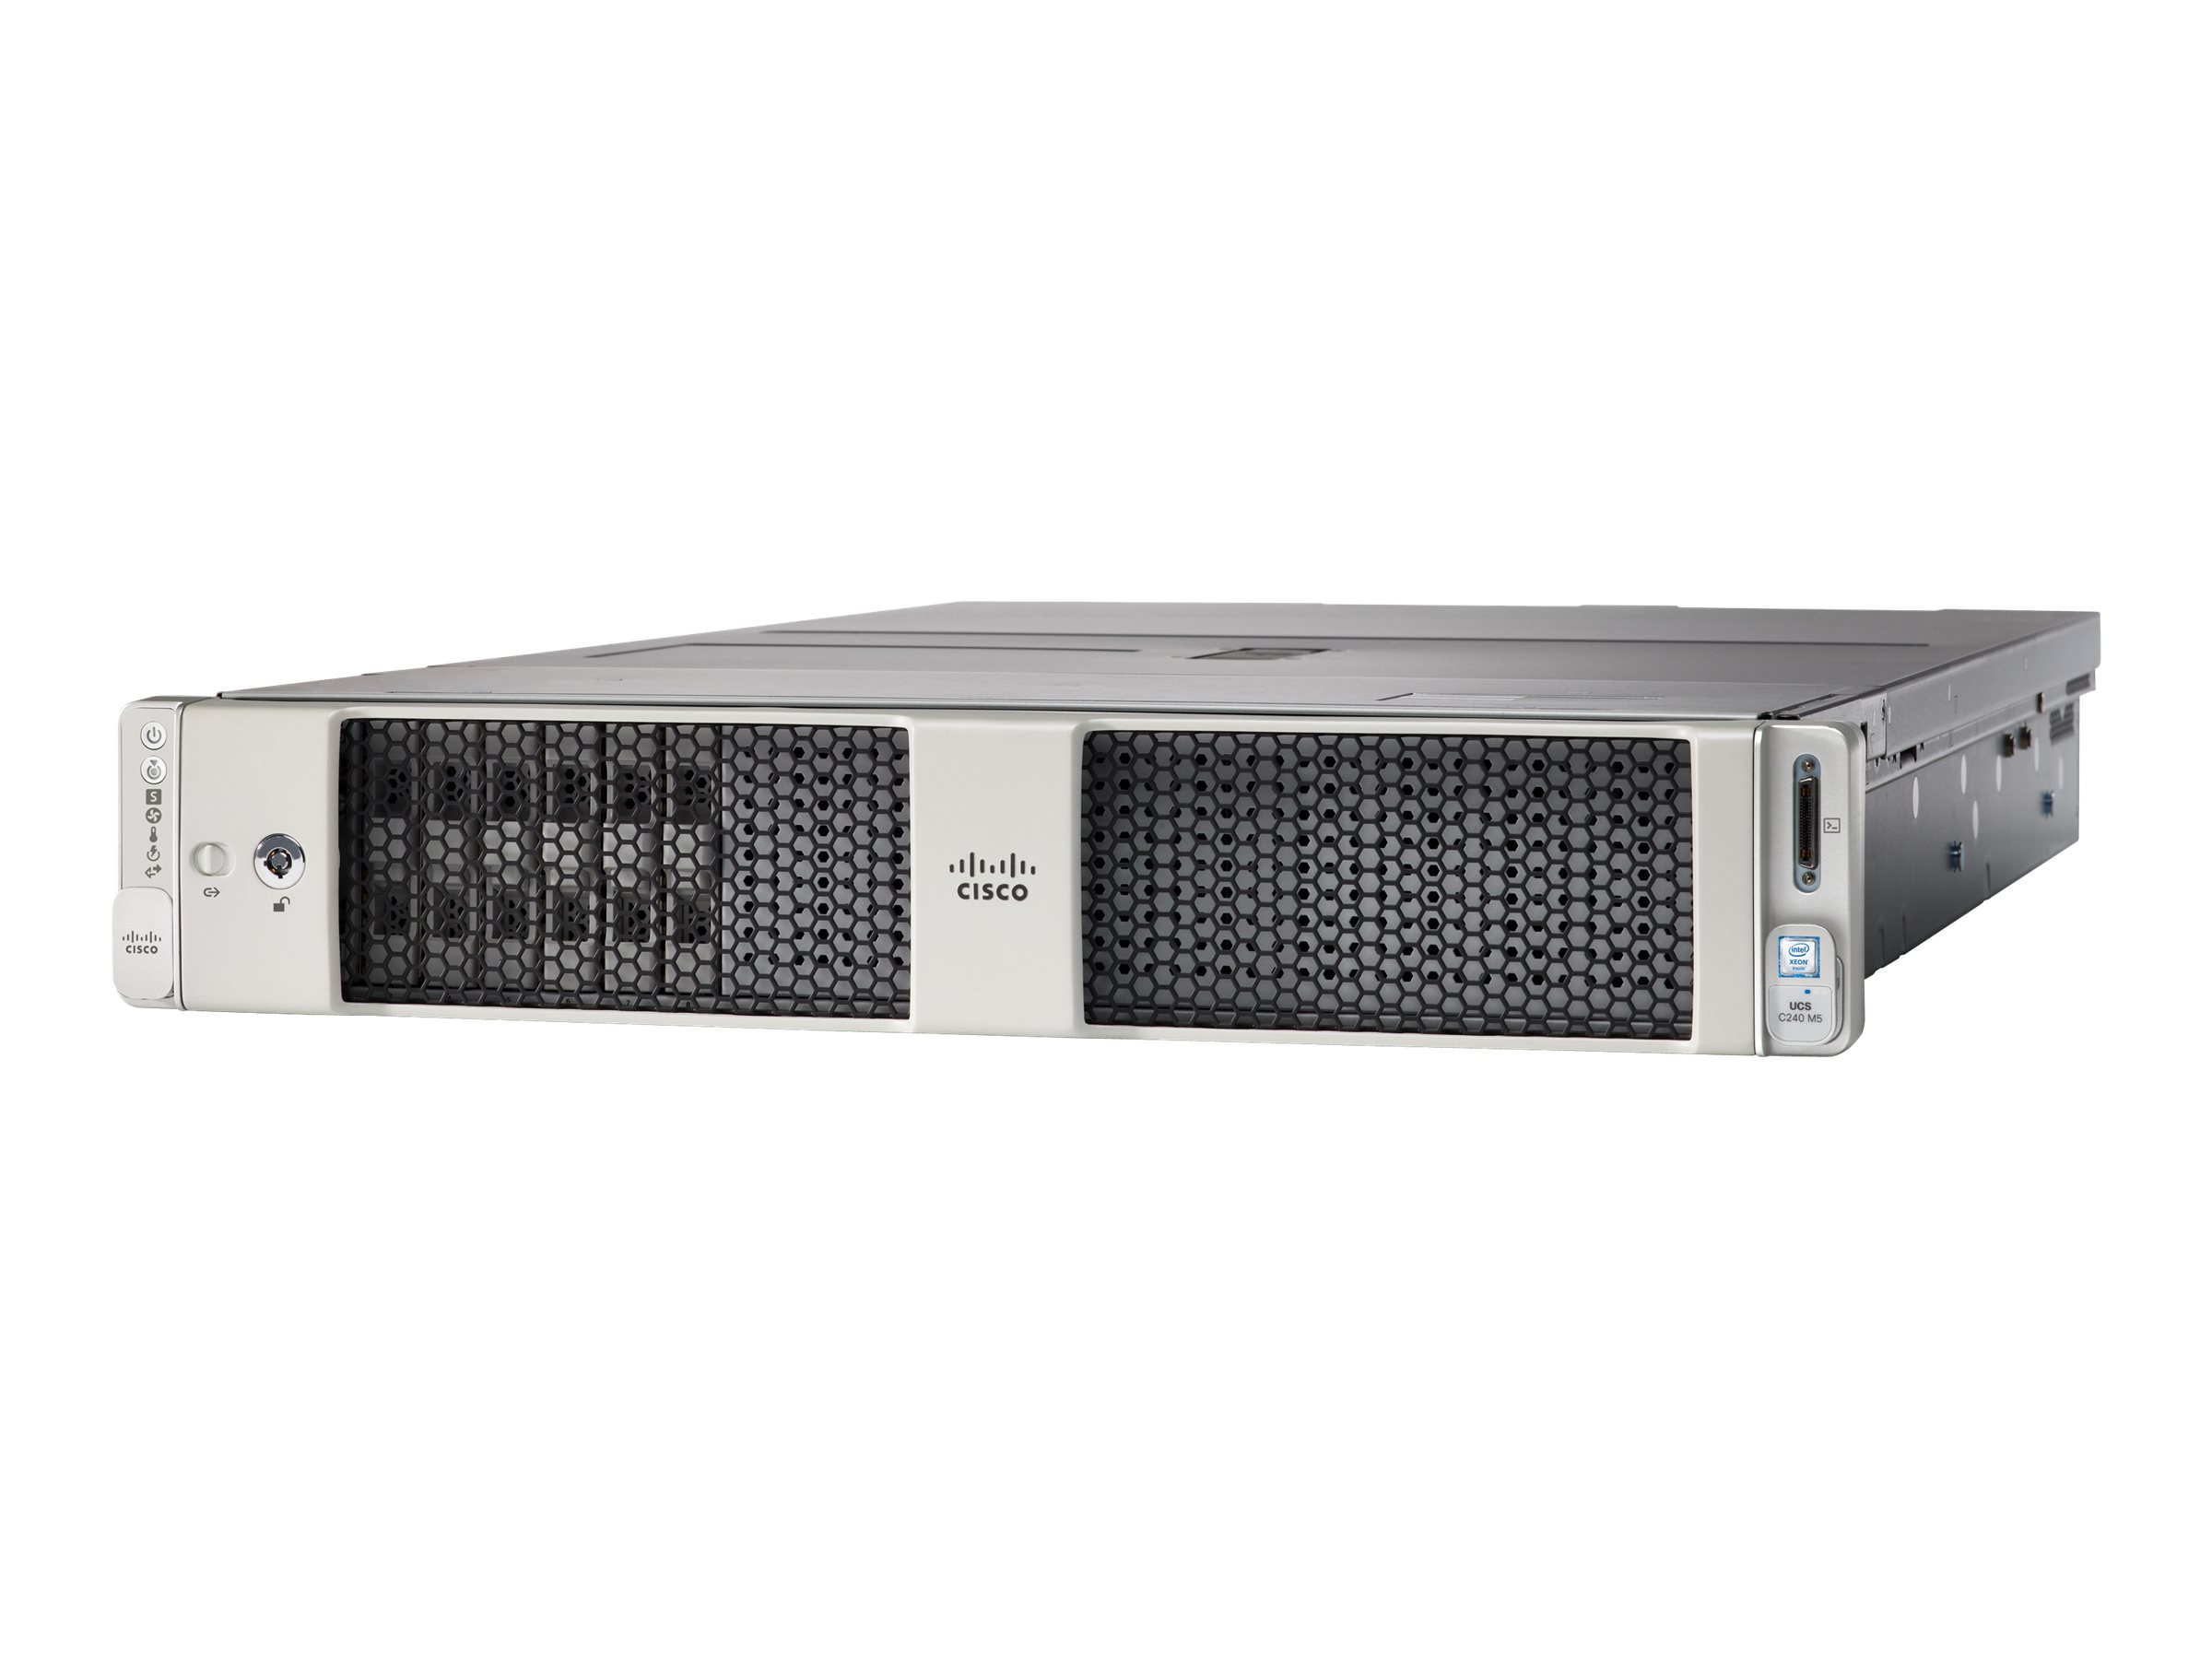 Cisco UCS C240 M5 Rack Server (Small Form Factor Disk Drive Model) - Server - Rack-Montage - 2U - zweiweg - keine CPU - RAM 0 GB - SATA/SAS - Hot-Swap 6.4 cm (2.5")